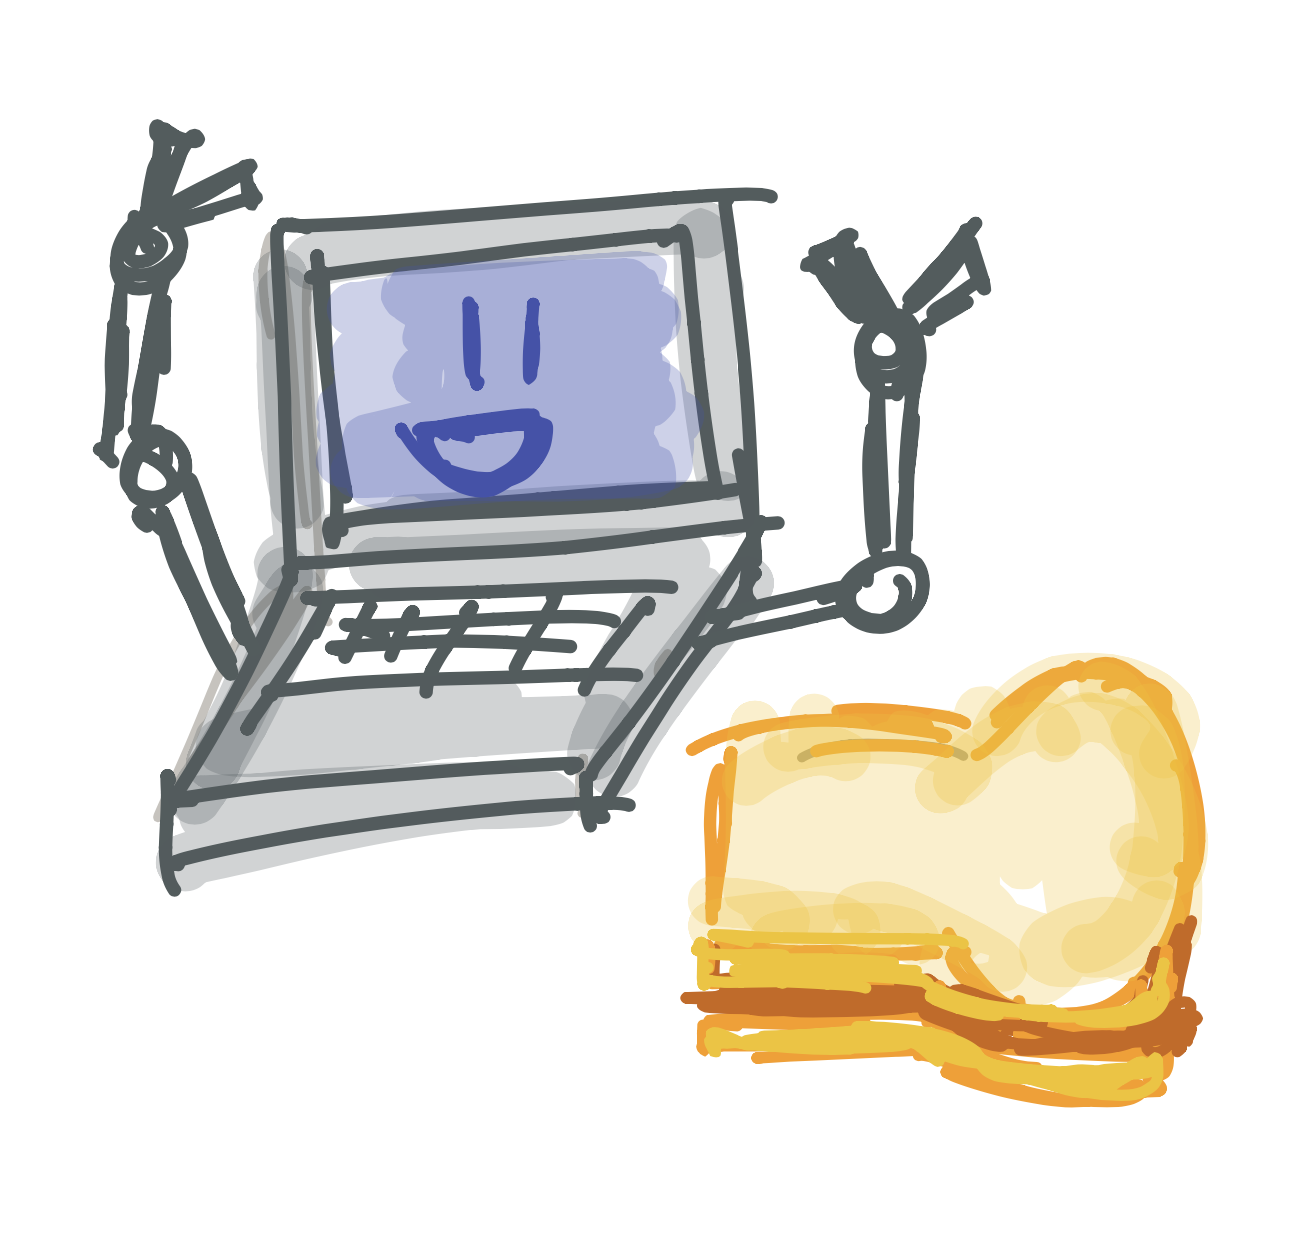 Peanut butter sandwich, happy robot arms